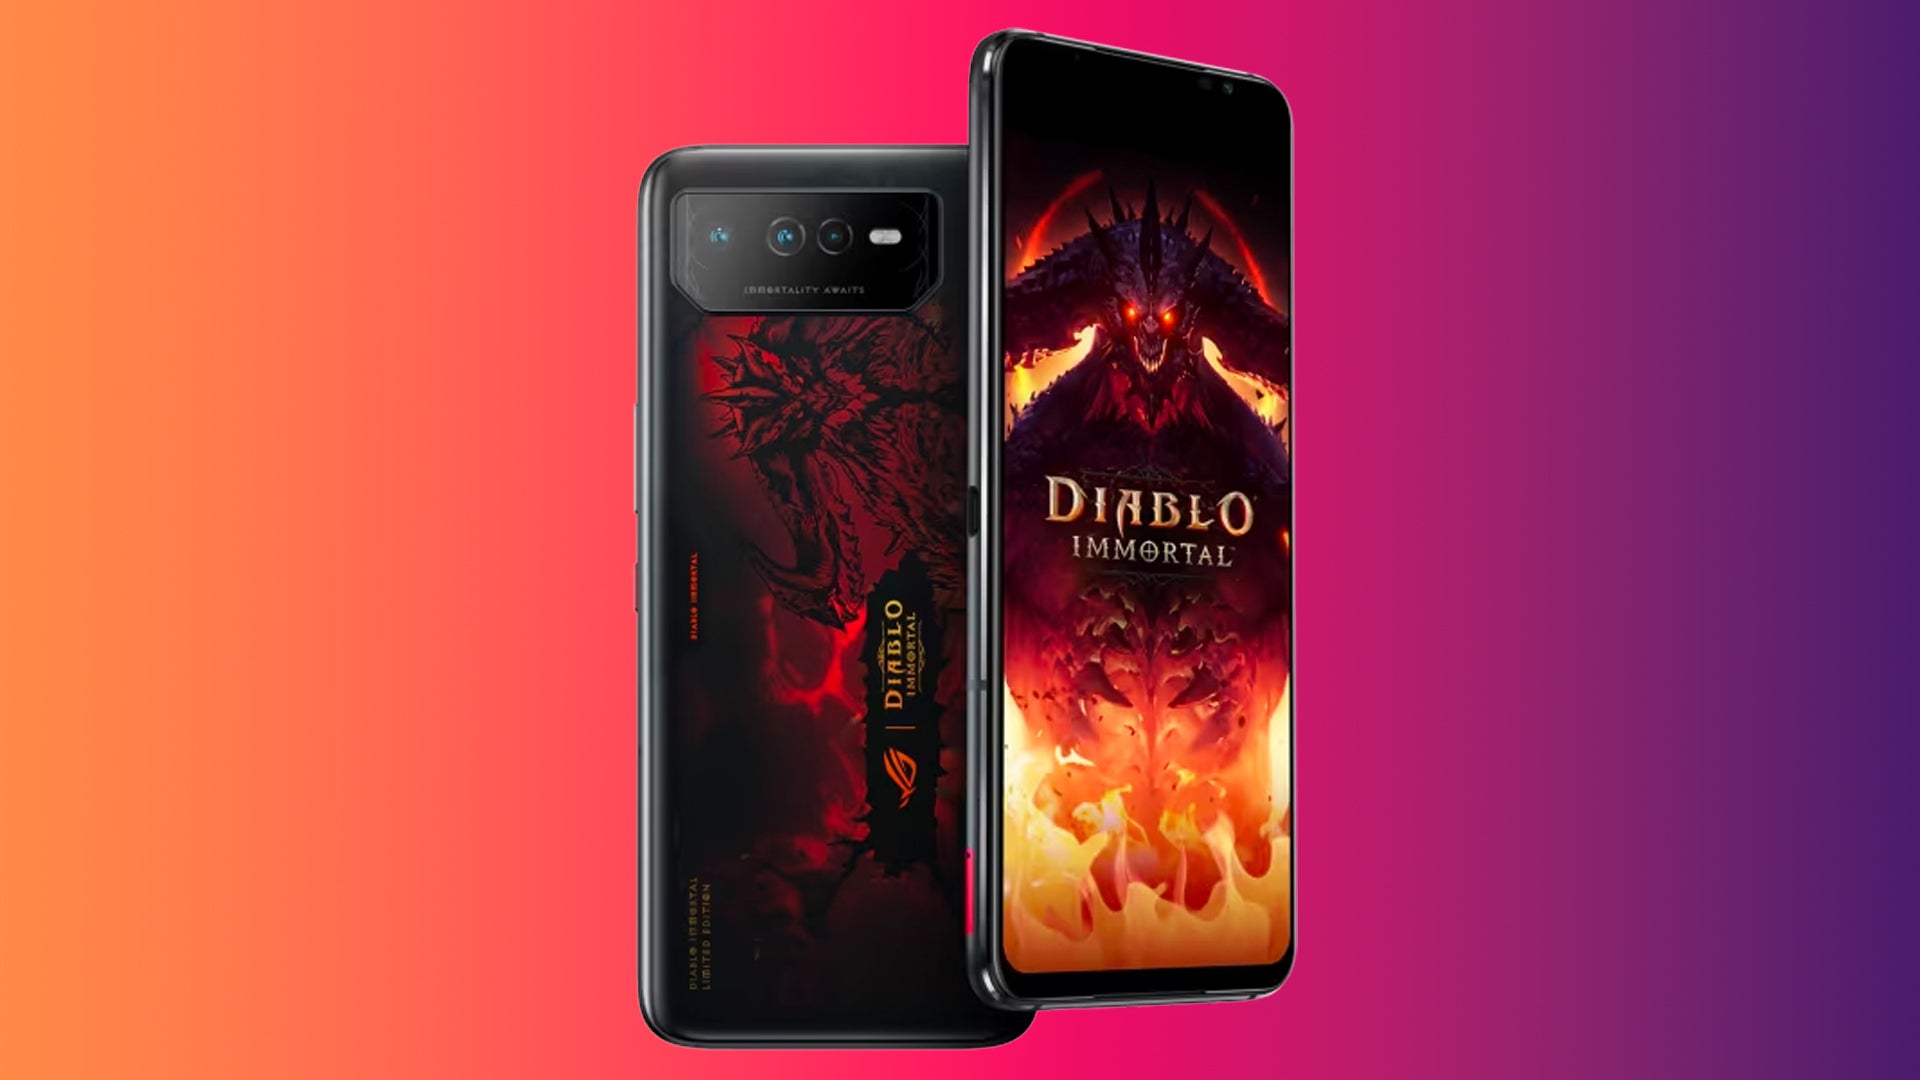 This Asus ROG Phone 6 Diablo Immortal Edition has experienced a 